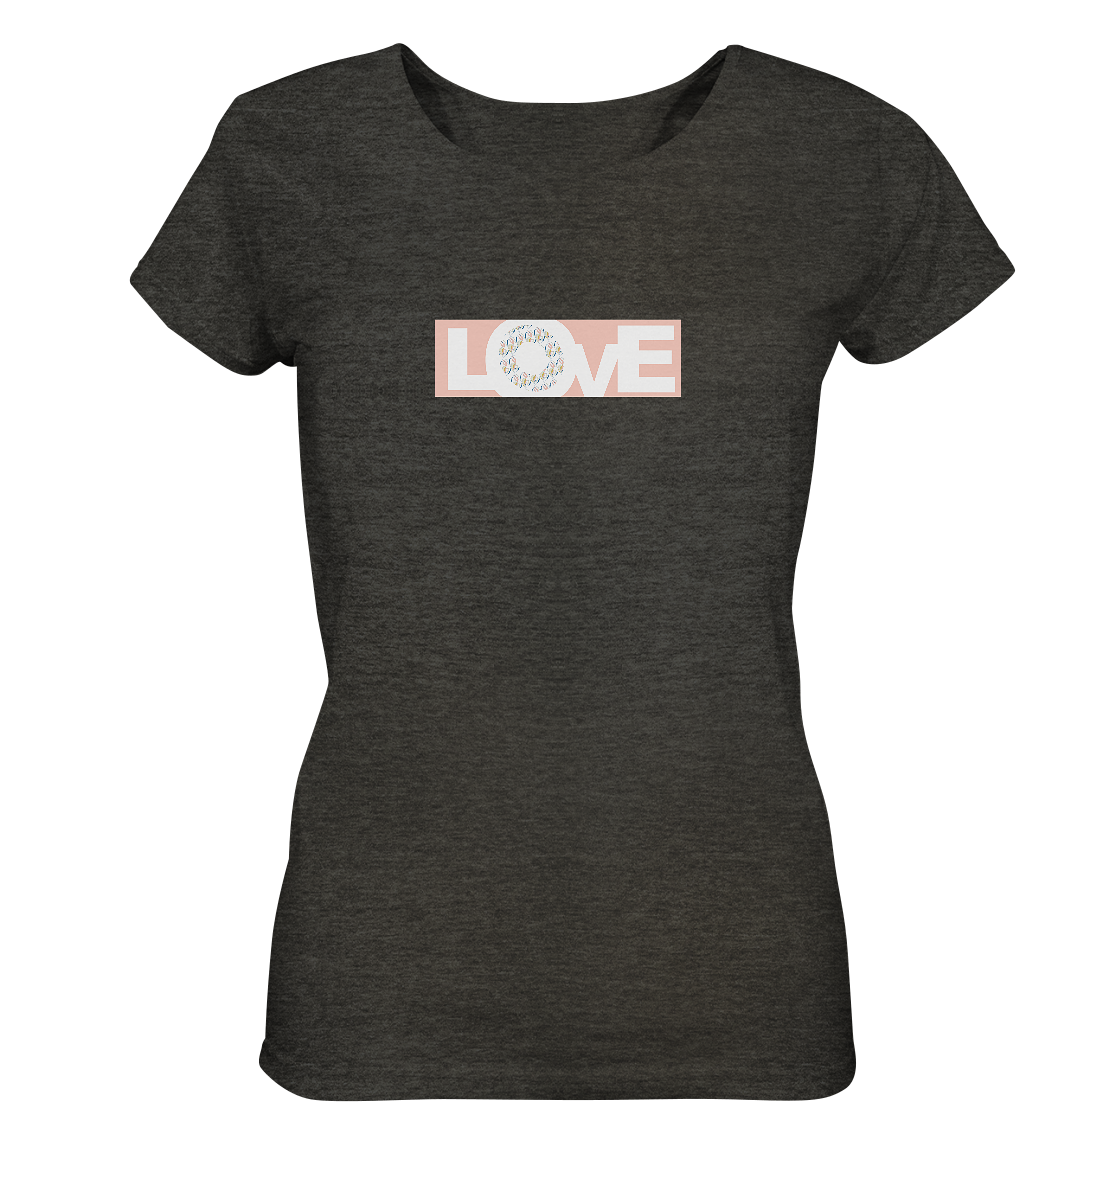 LOVE - Ladies Organic Shirt (meliert) - Design by Ulala-Vienna